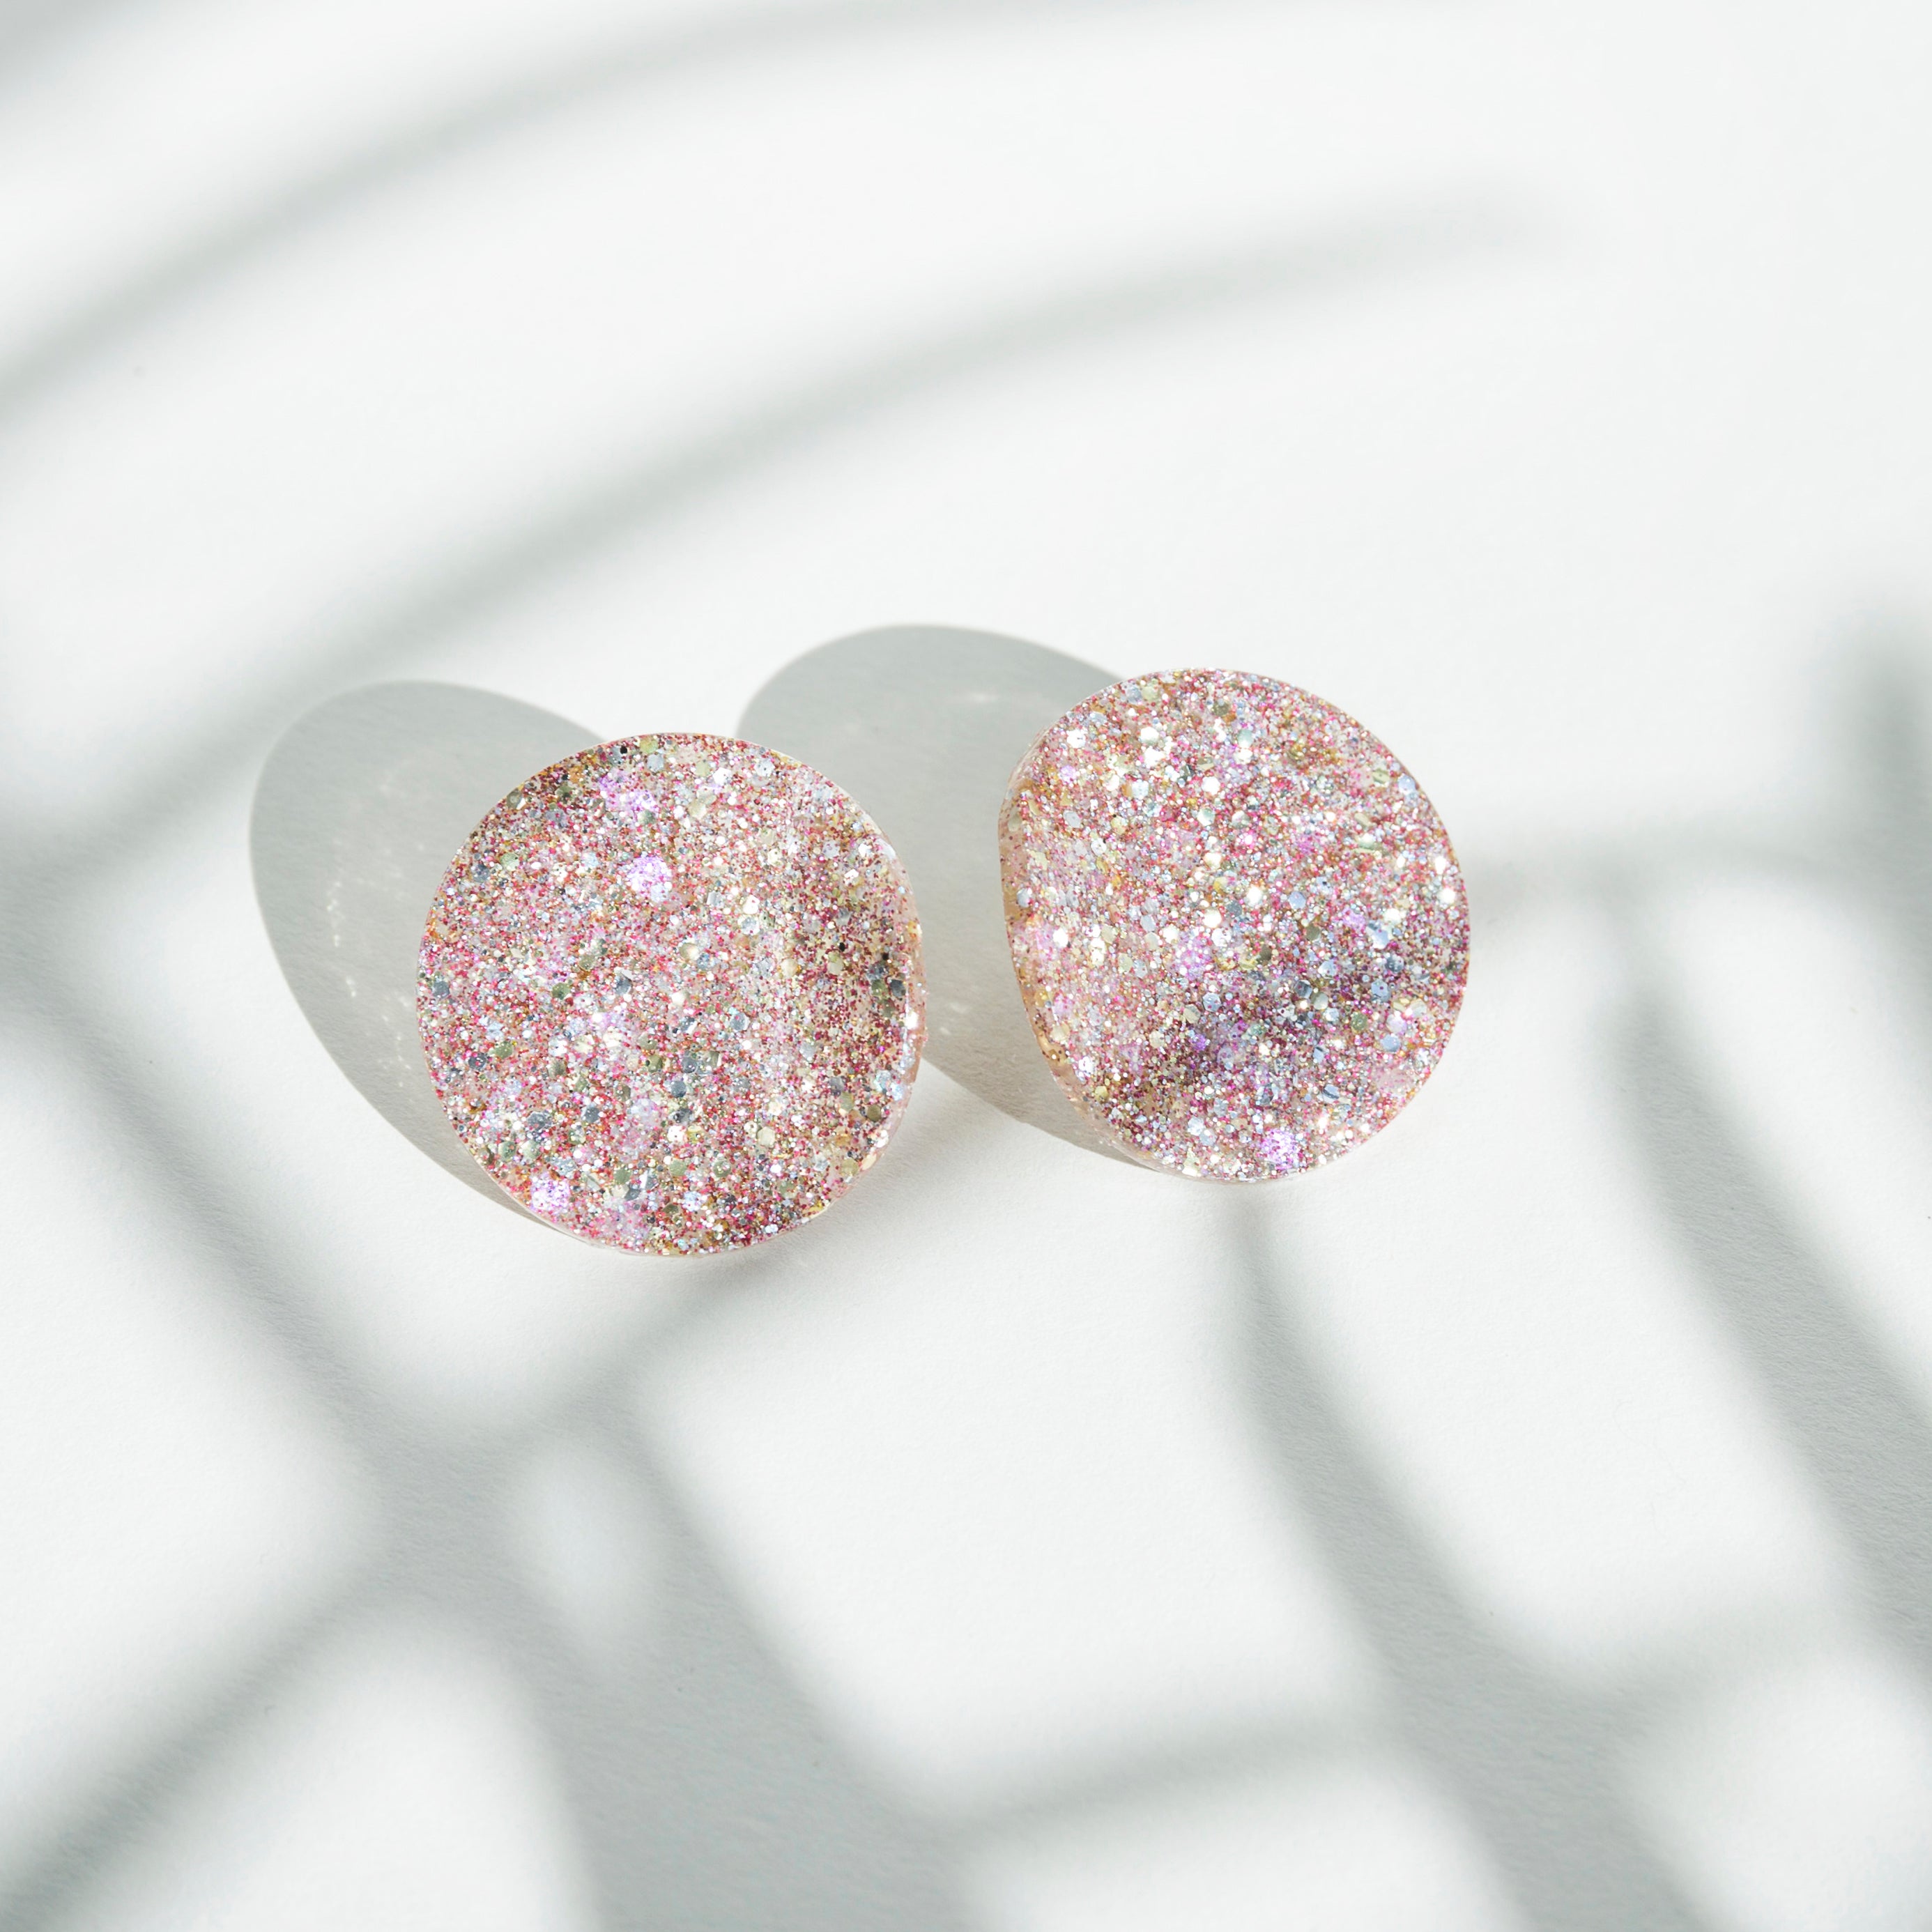 Paradise earrings